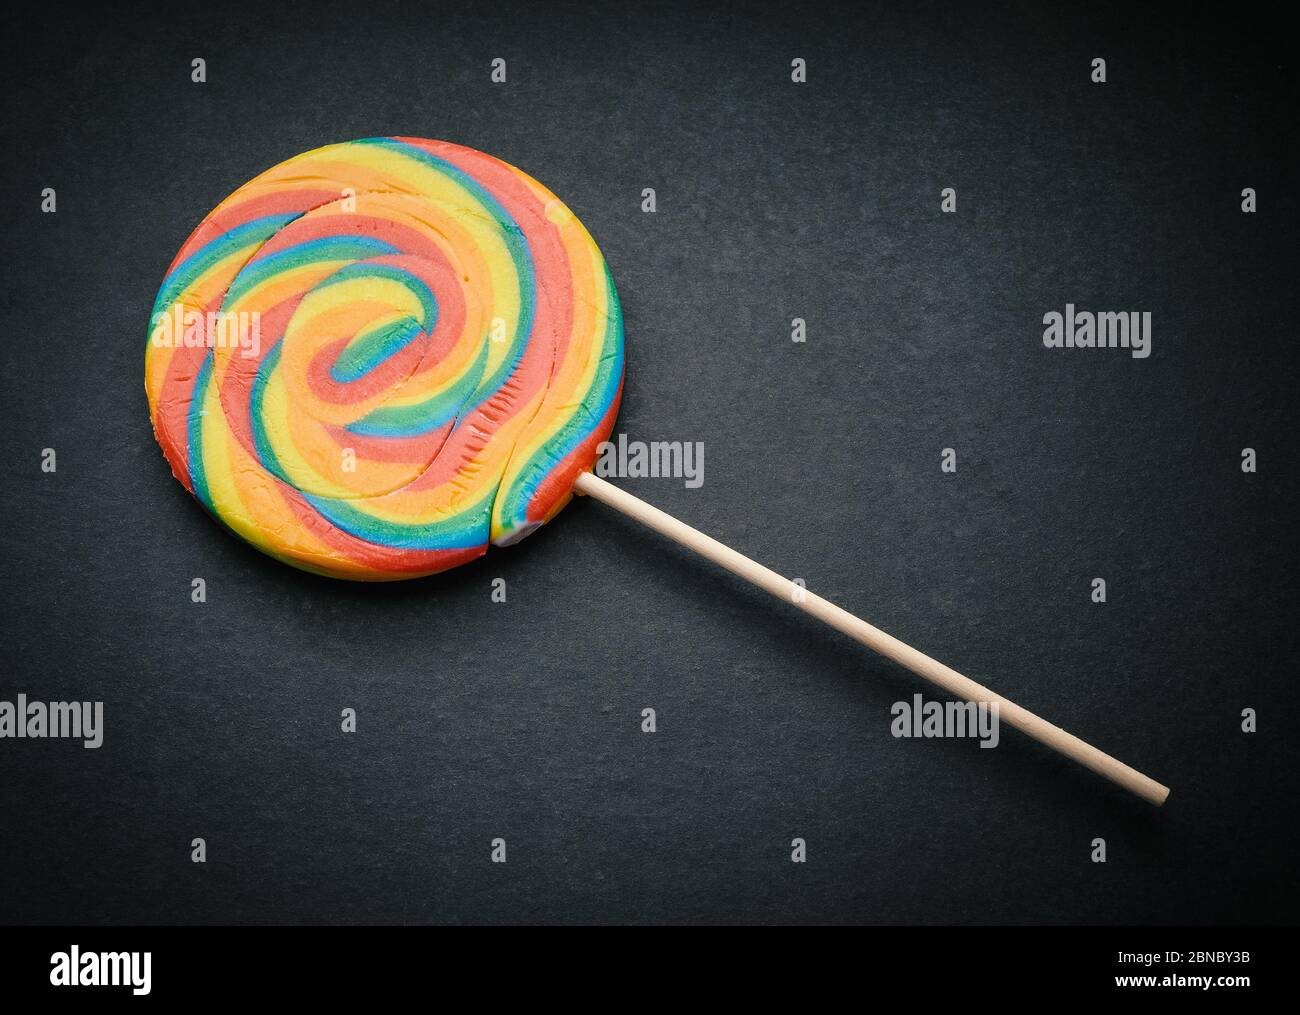 Natural looking lollipop on dark background Stock Photo - Alamy